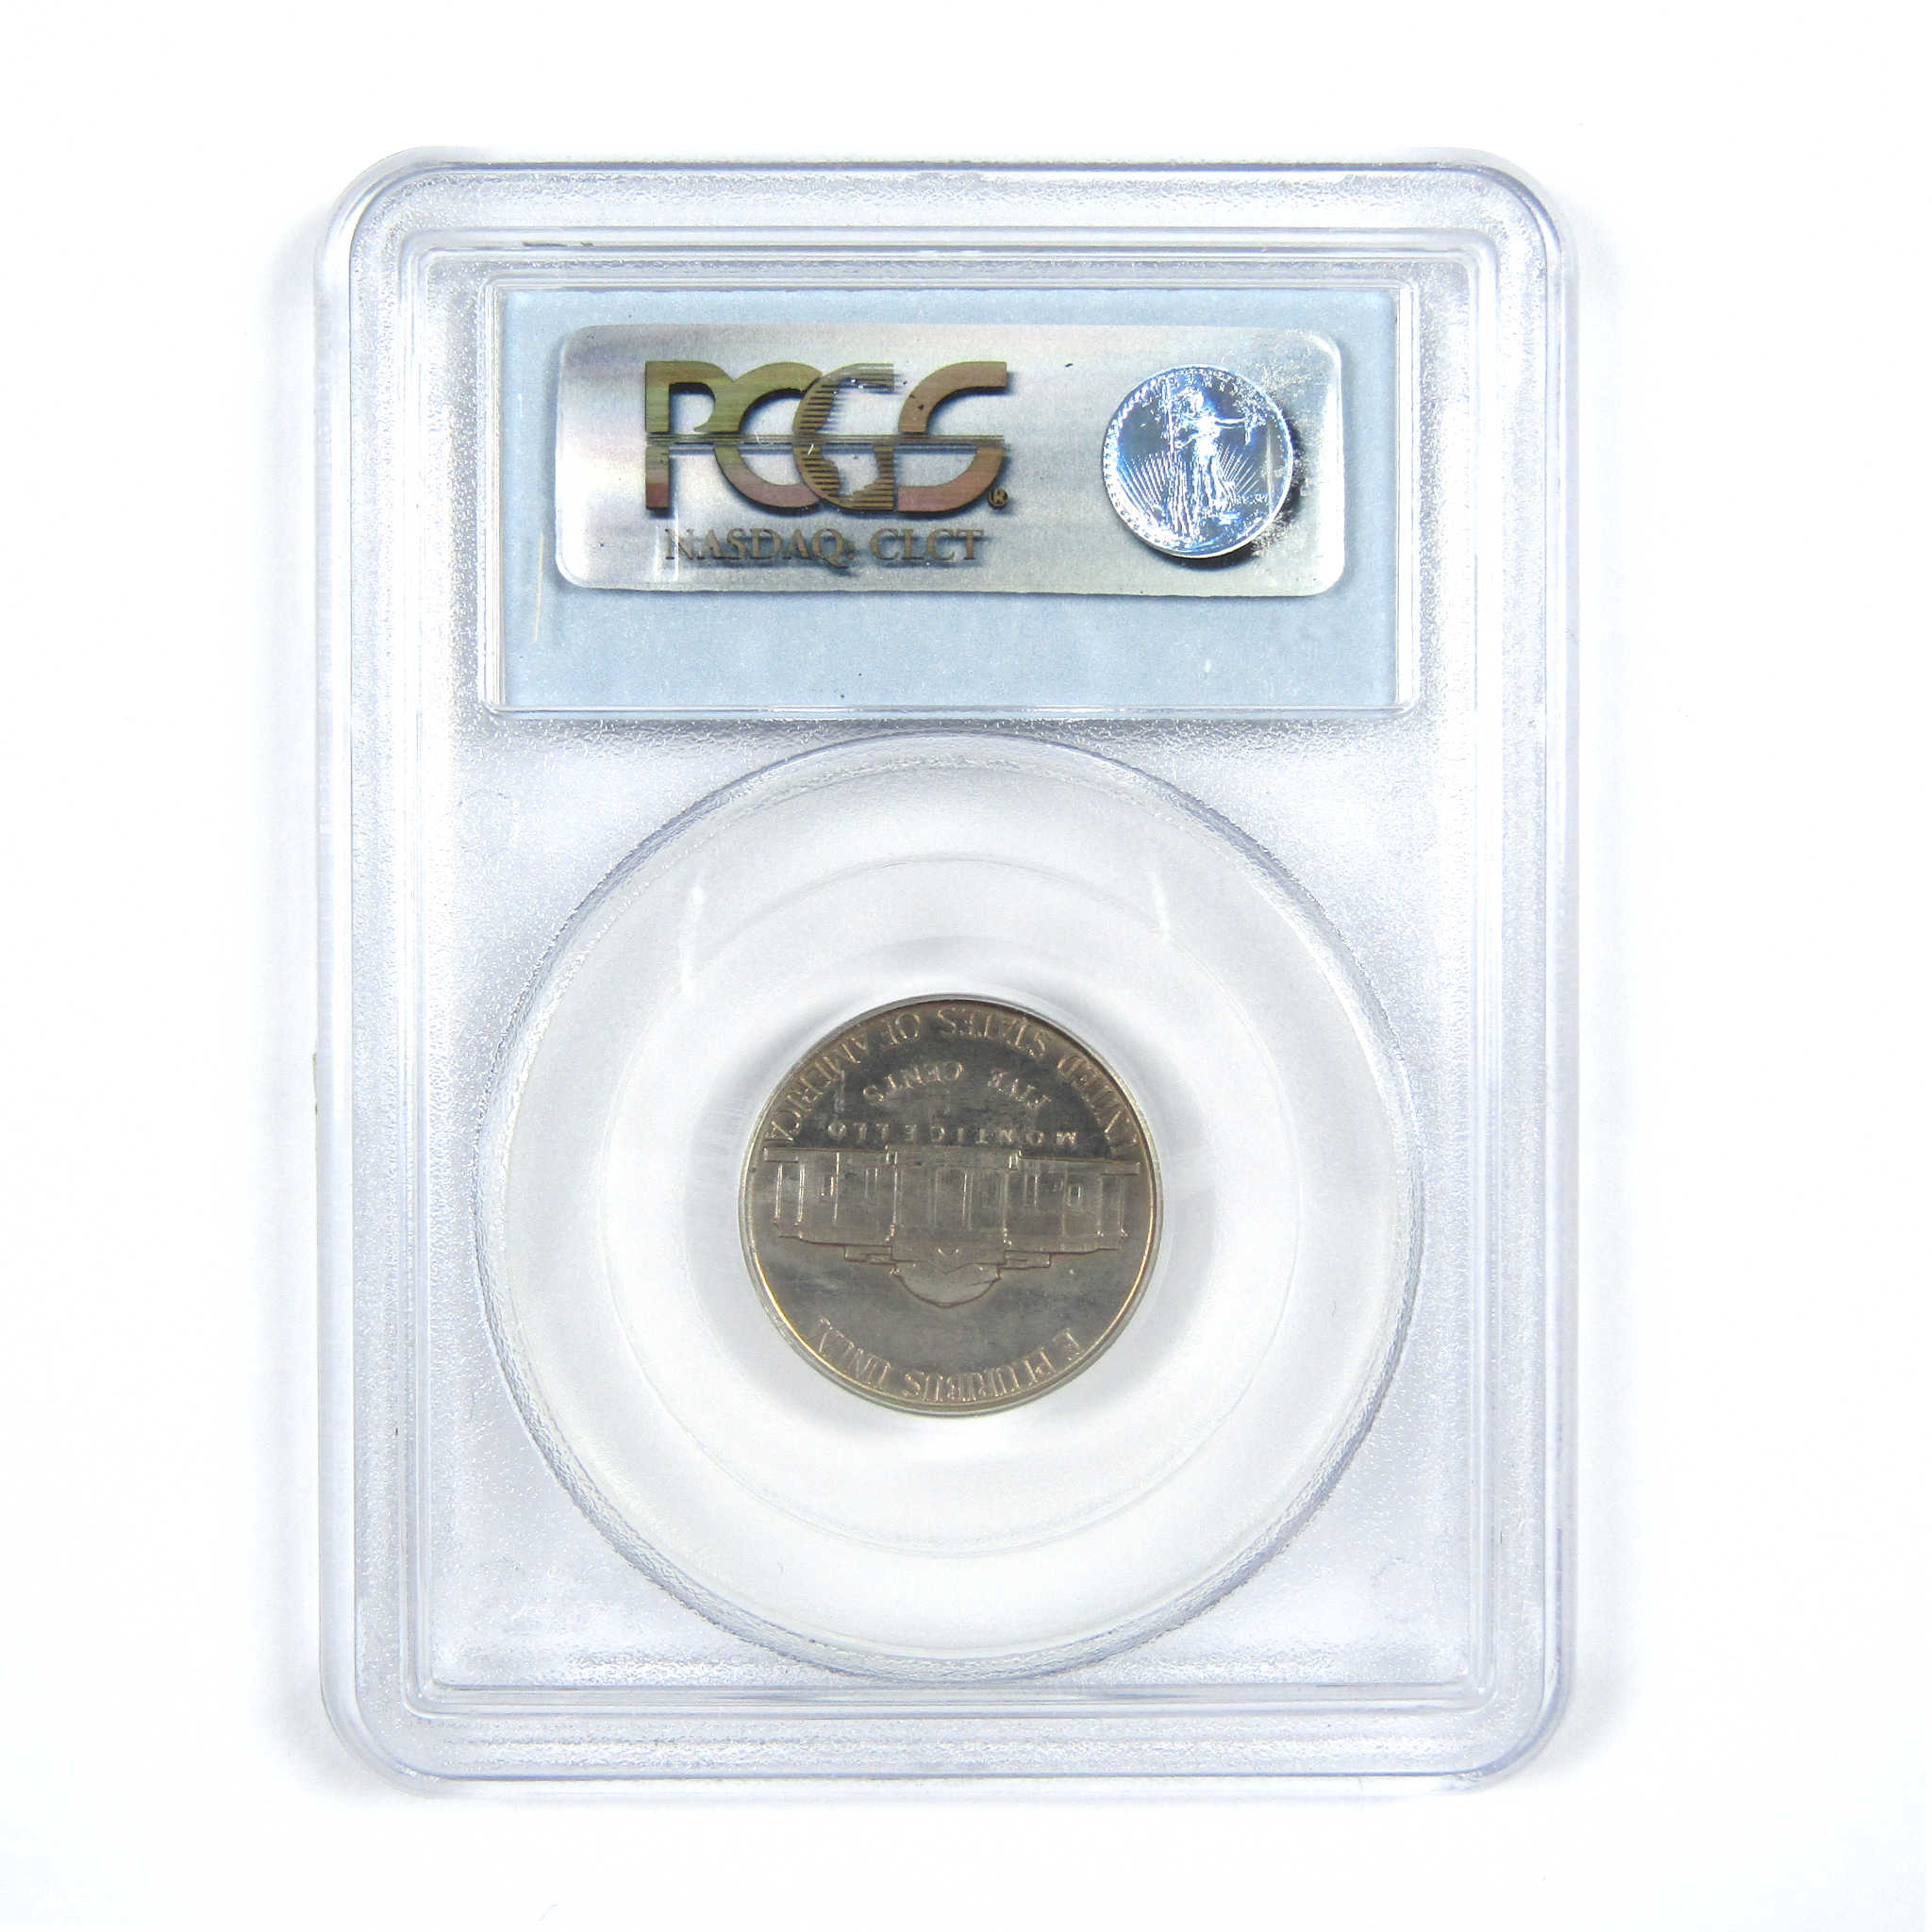 1942 Type 1 Jefferson Nickel PR 65 PCGS 5c Proof Coin SKU:CPC7452